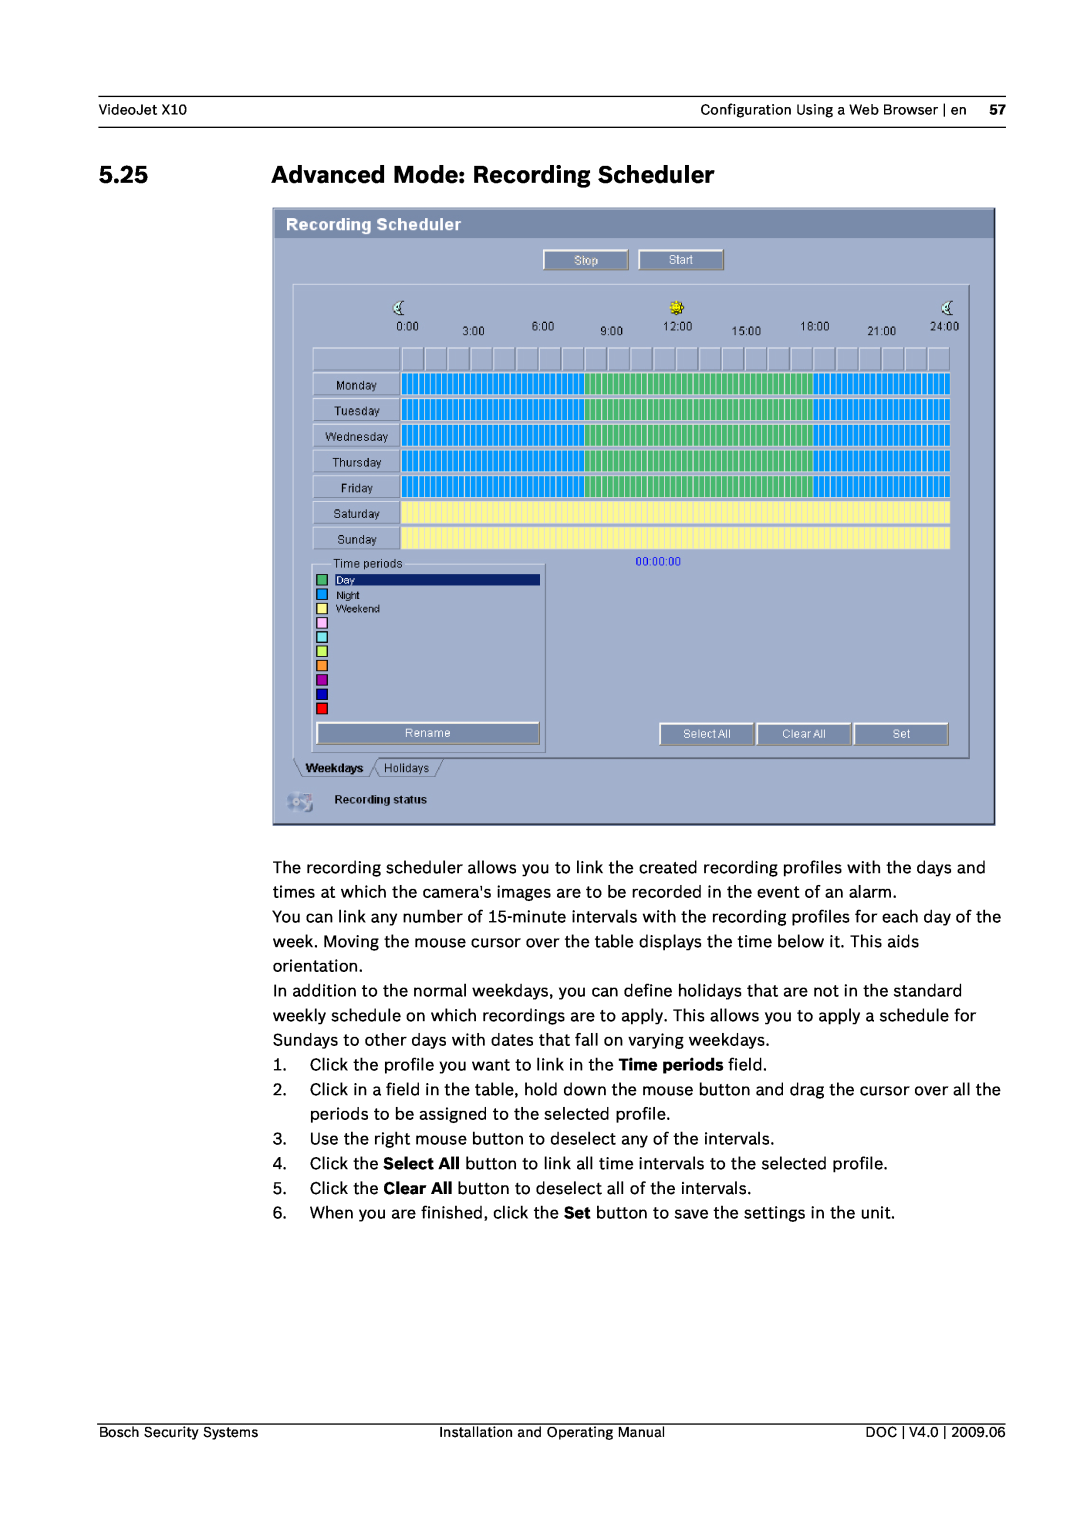 Bosch Appliances X10 manual 5.25, Advanced Mode Recording Scheduler 